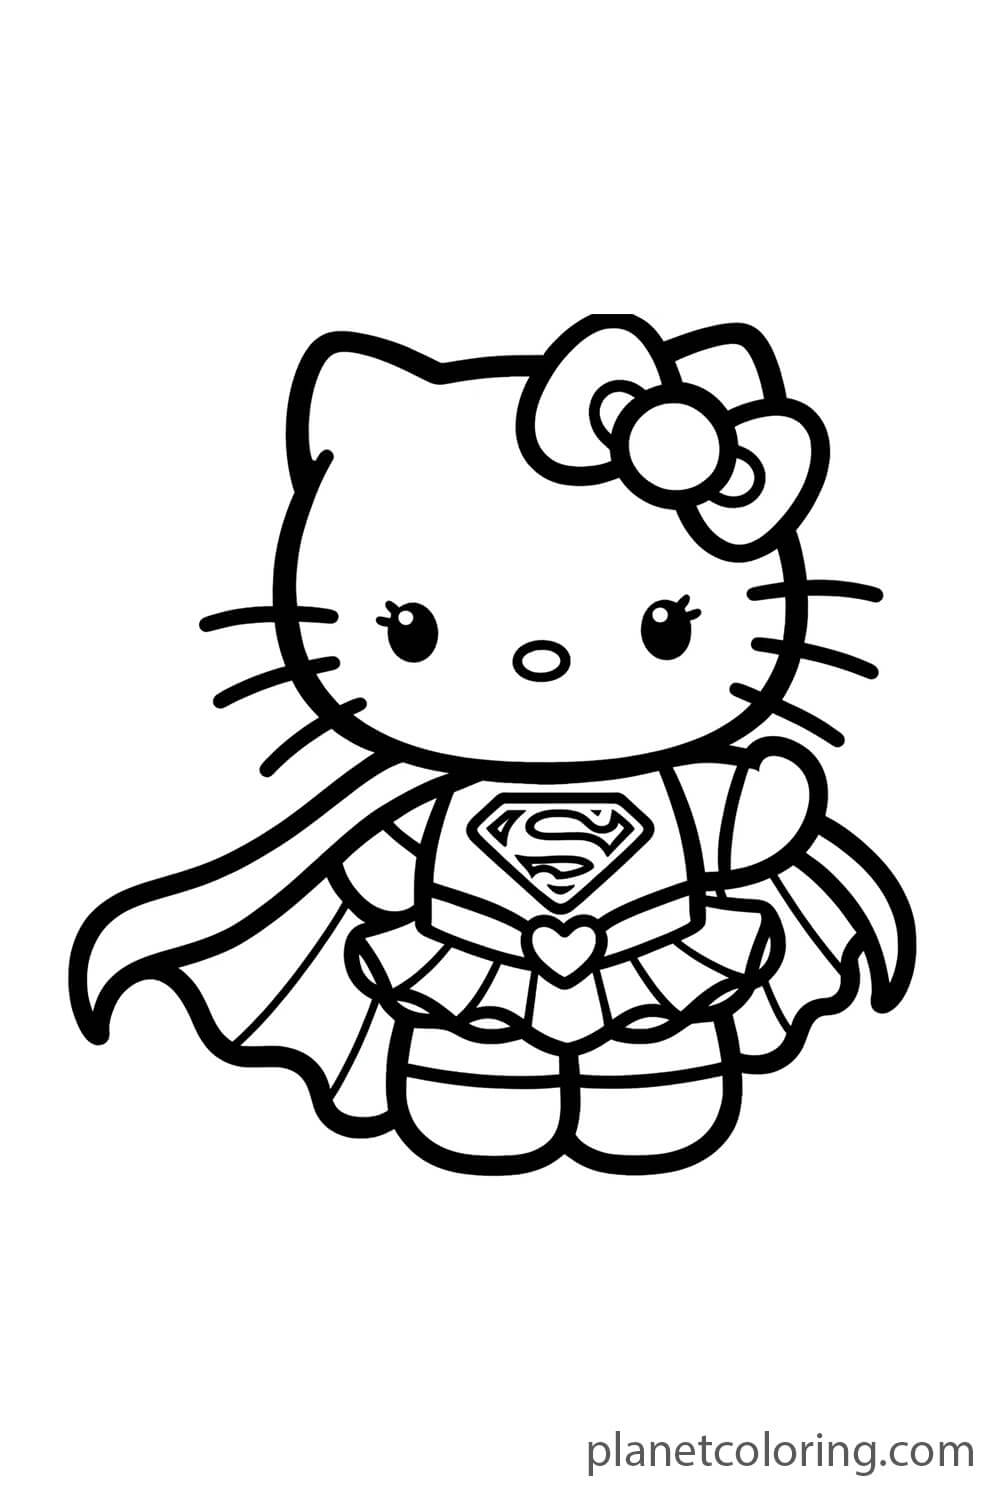 Hello Kitty with a superhero cape